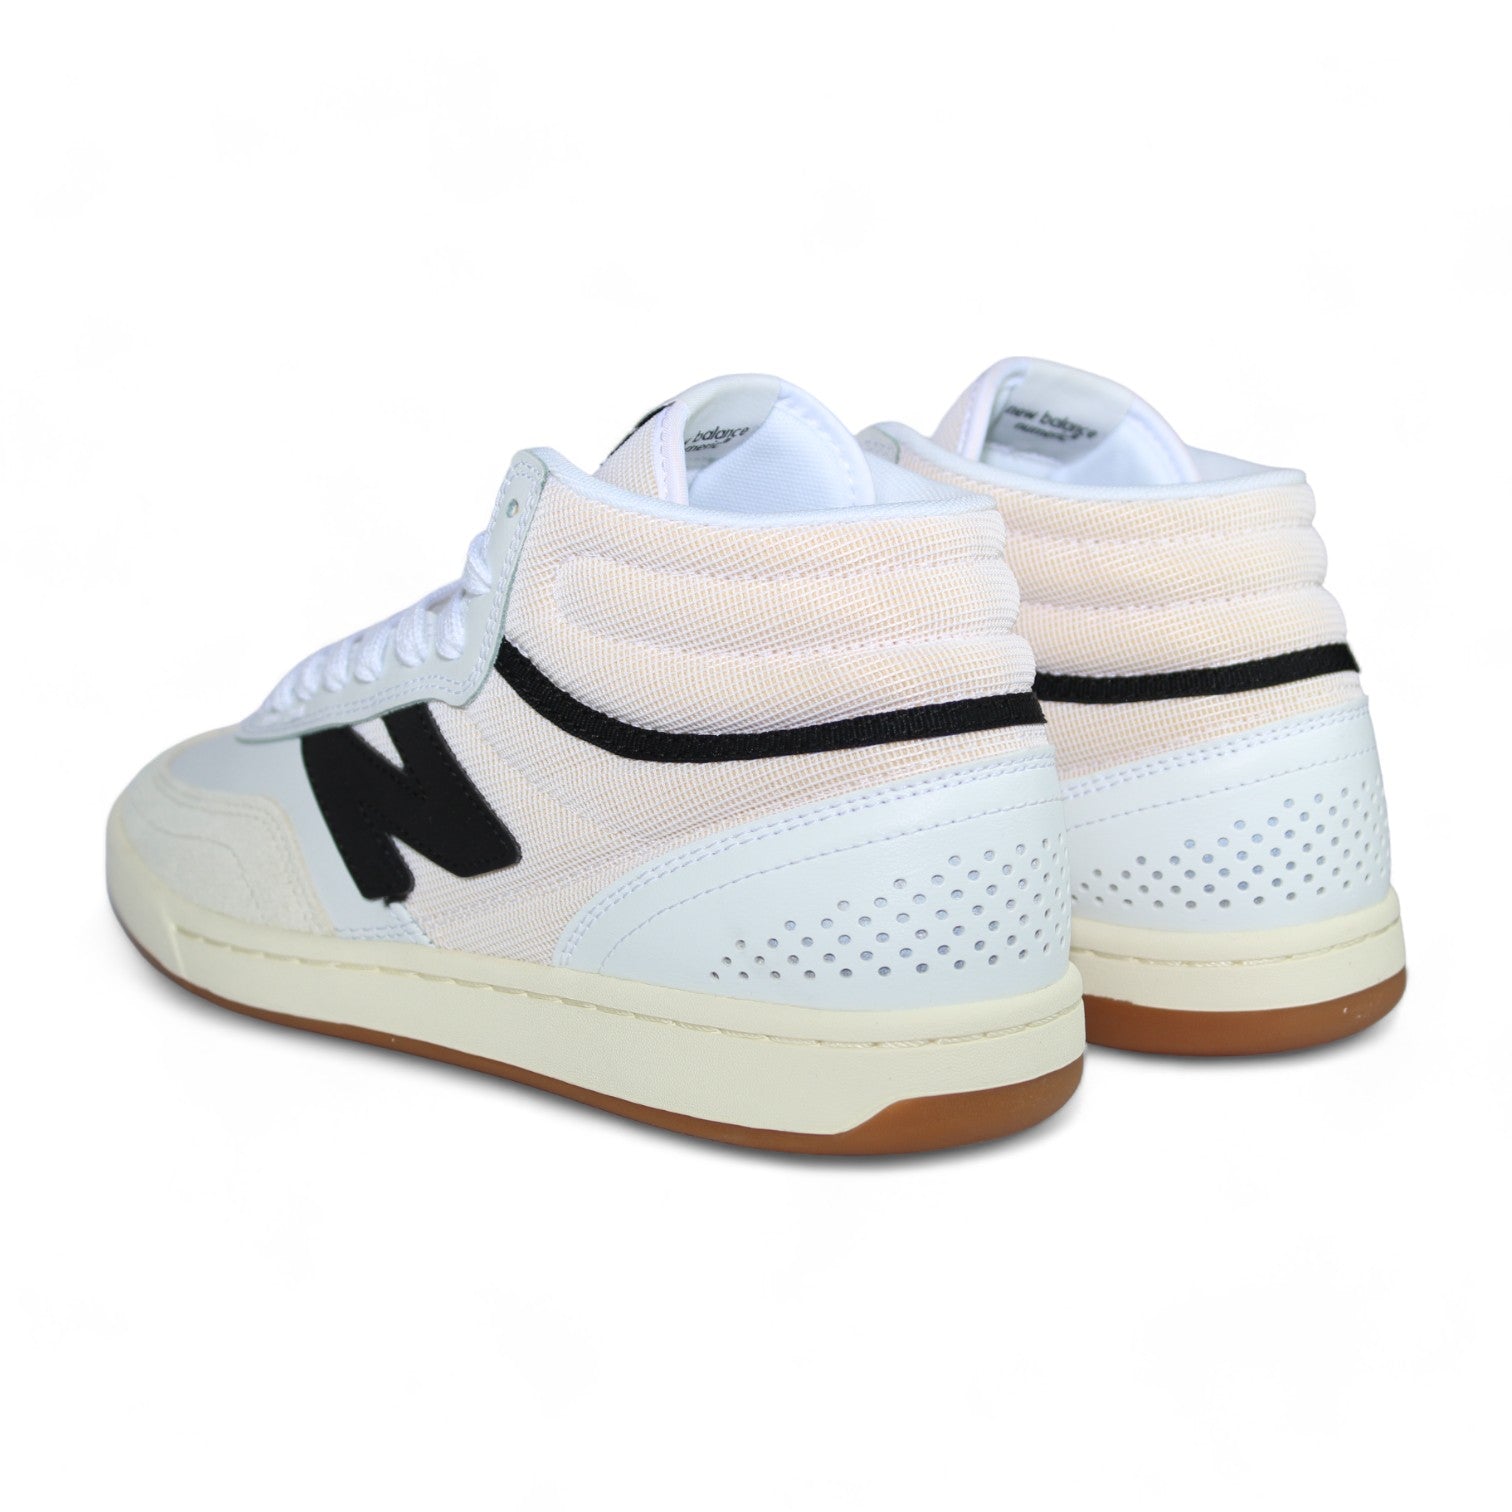 New Balance Numeric NM440v2 High Shoes  - White/Black